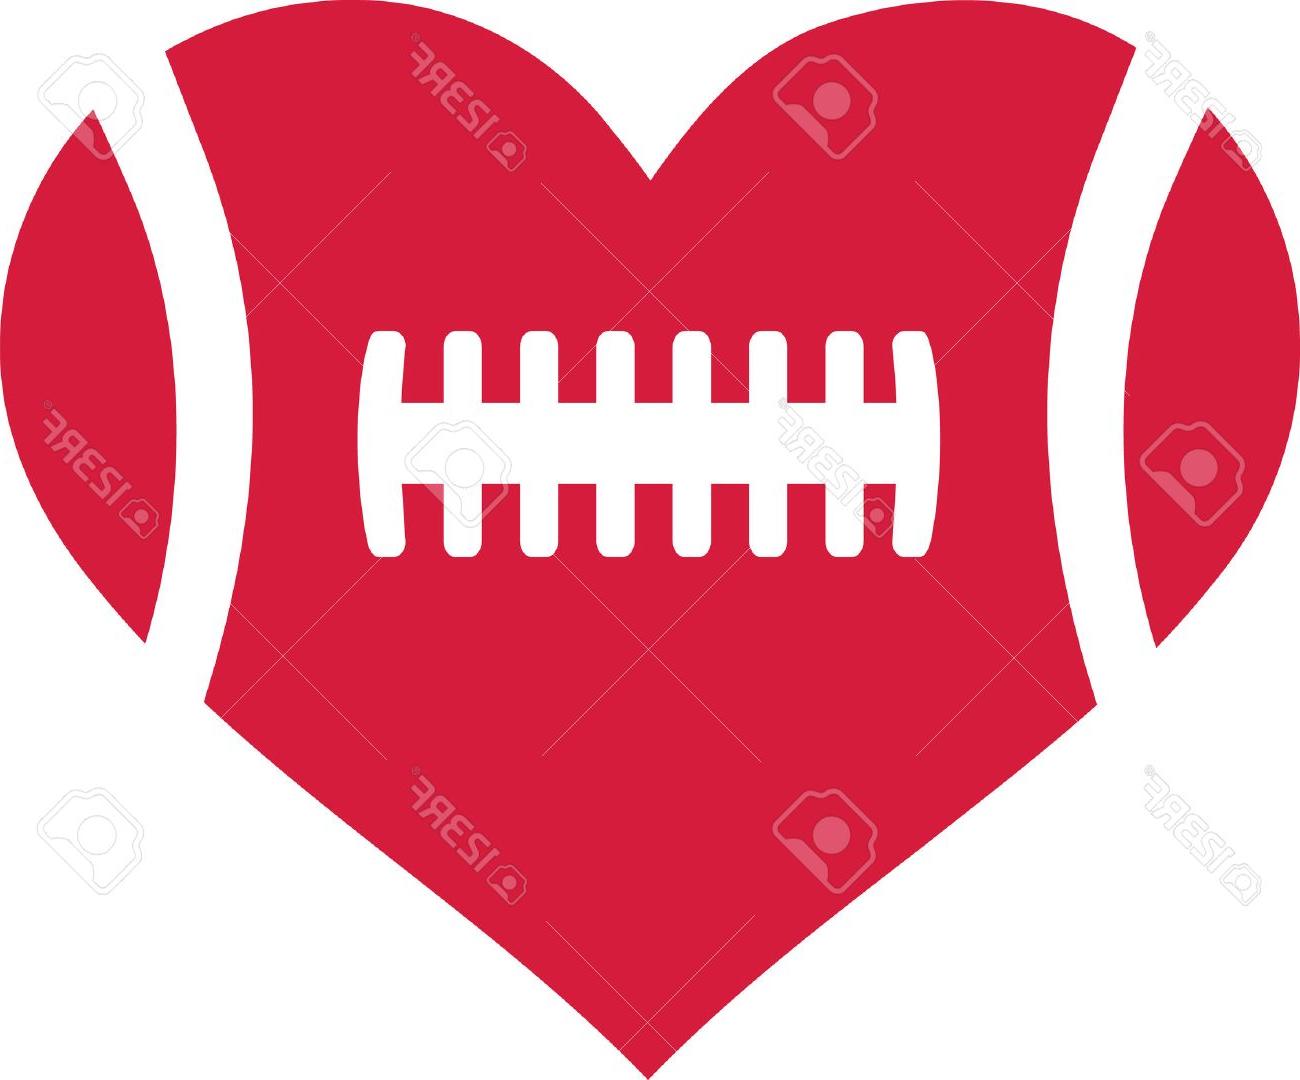 Best Football Heart Outline Vector Images